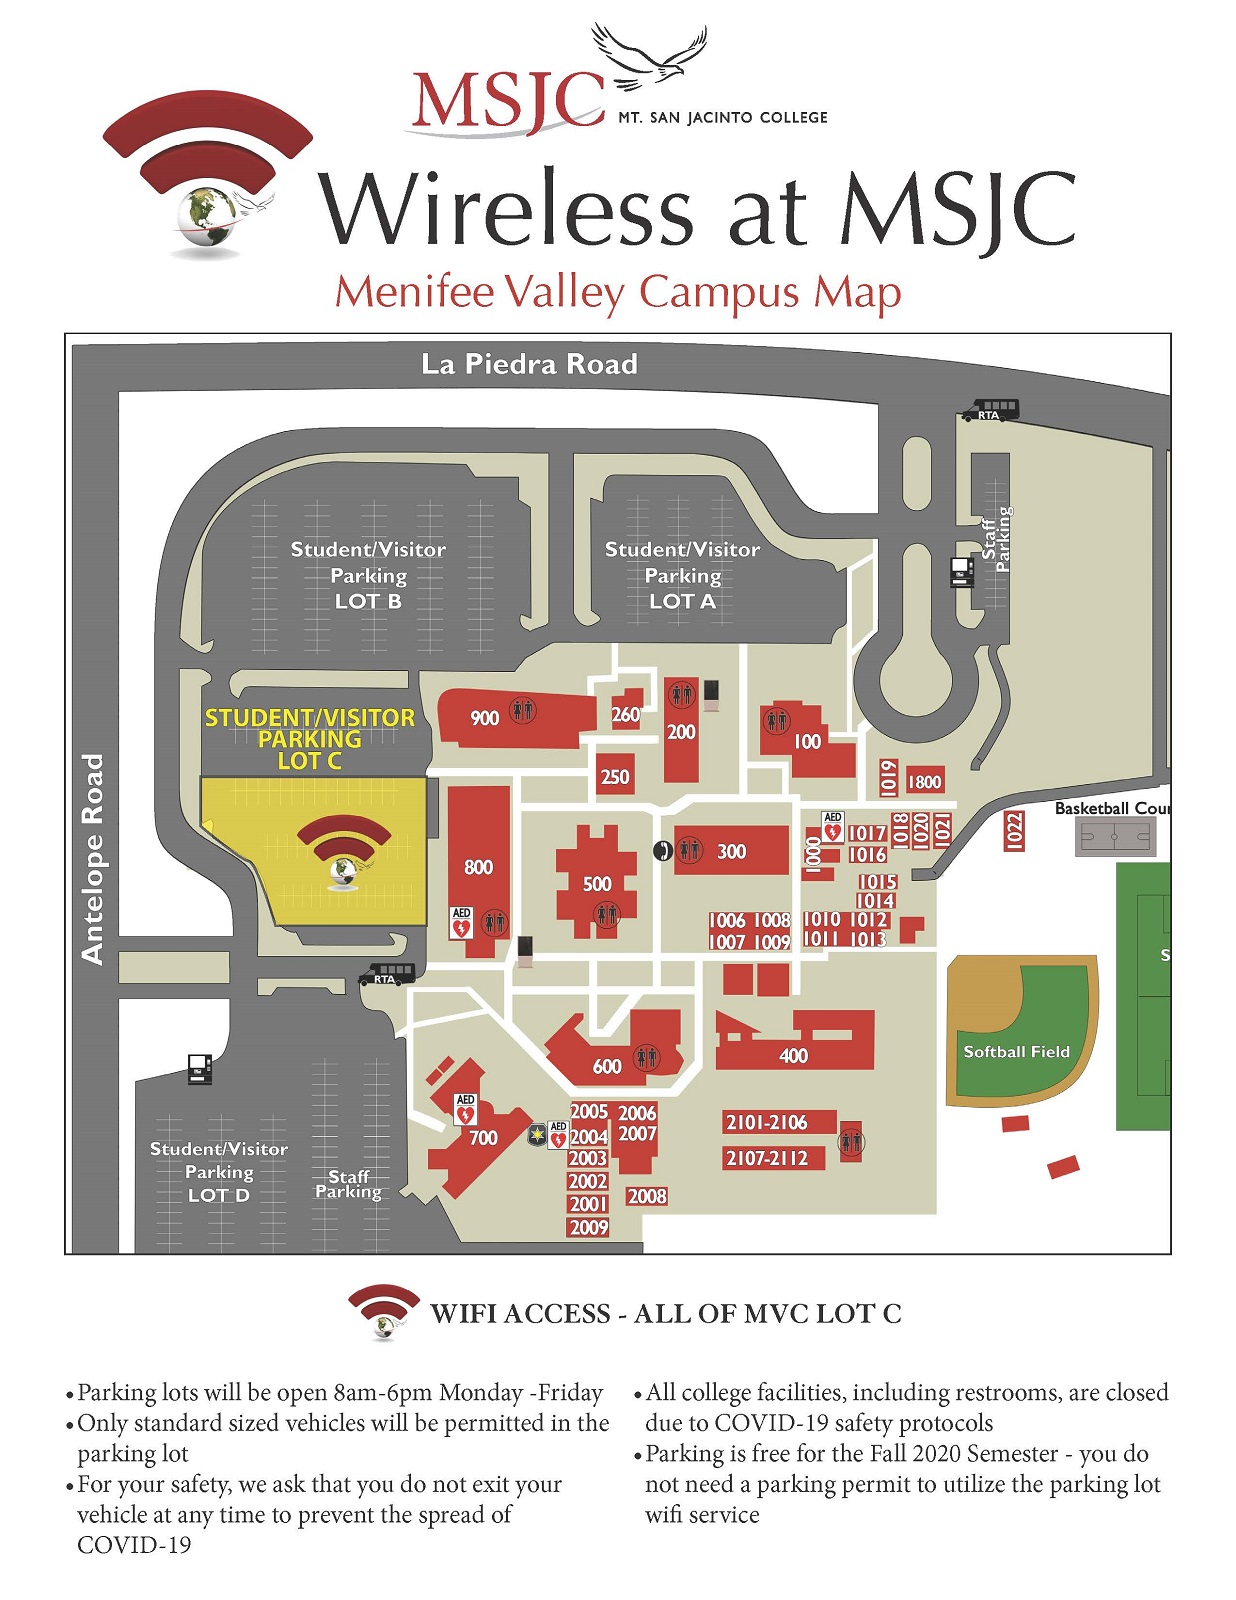 Menifee Valley Campus wireless access